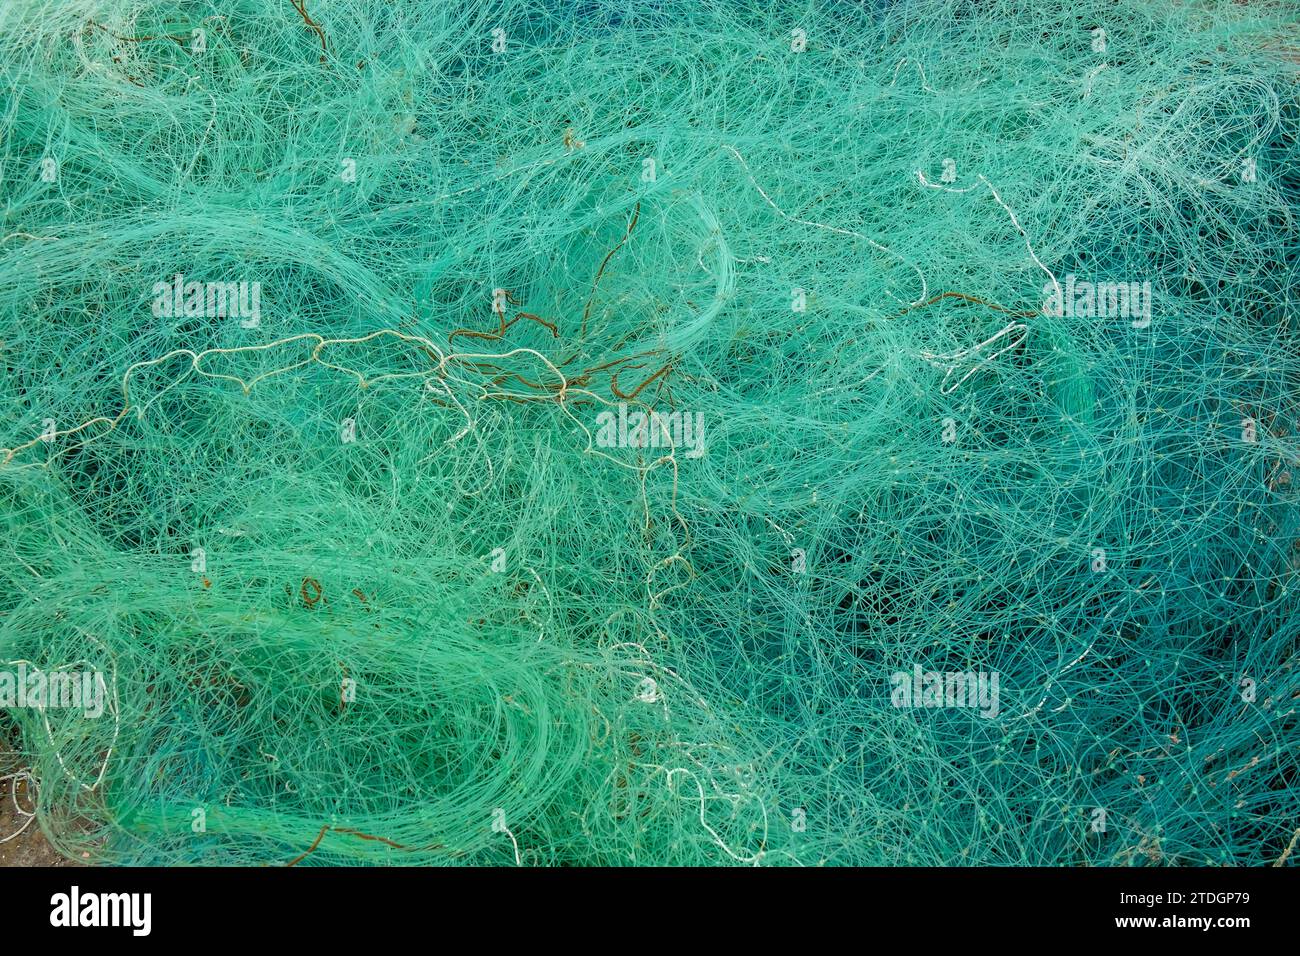 Net fishing ireland fish hi-res stock photography and images - Alamy